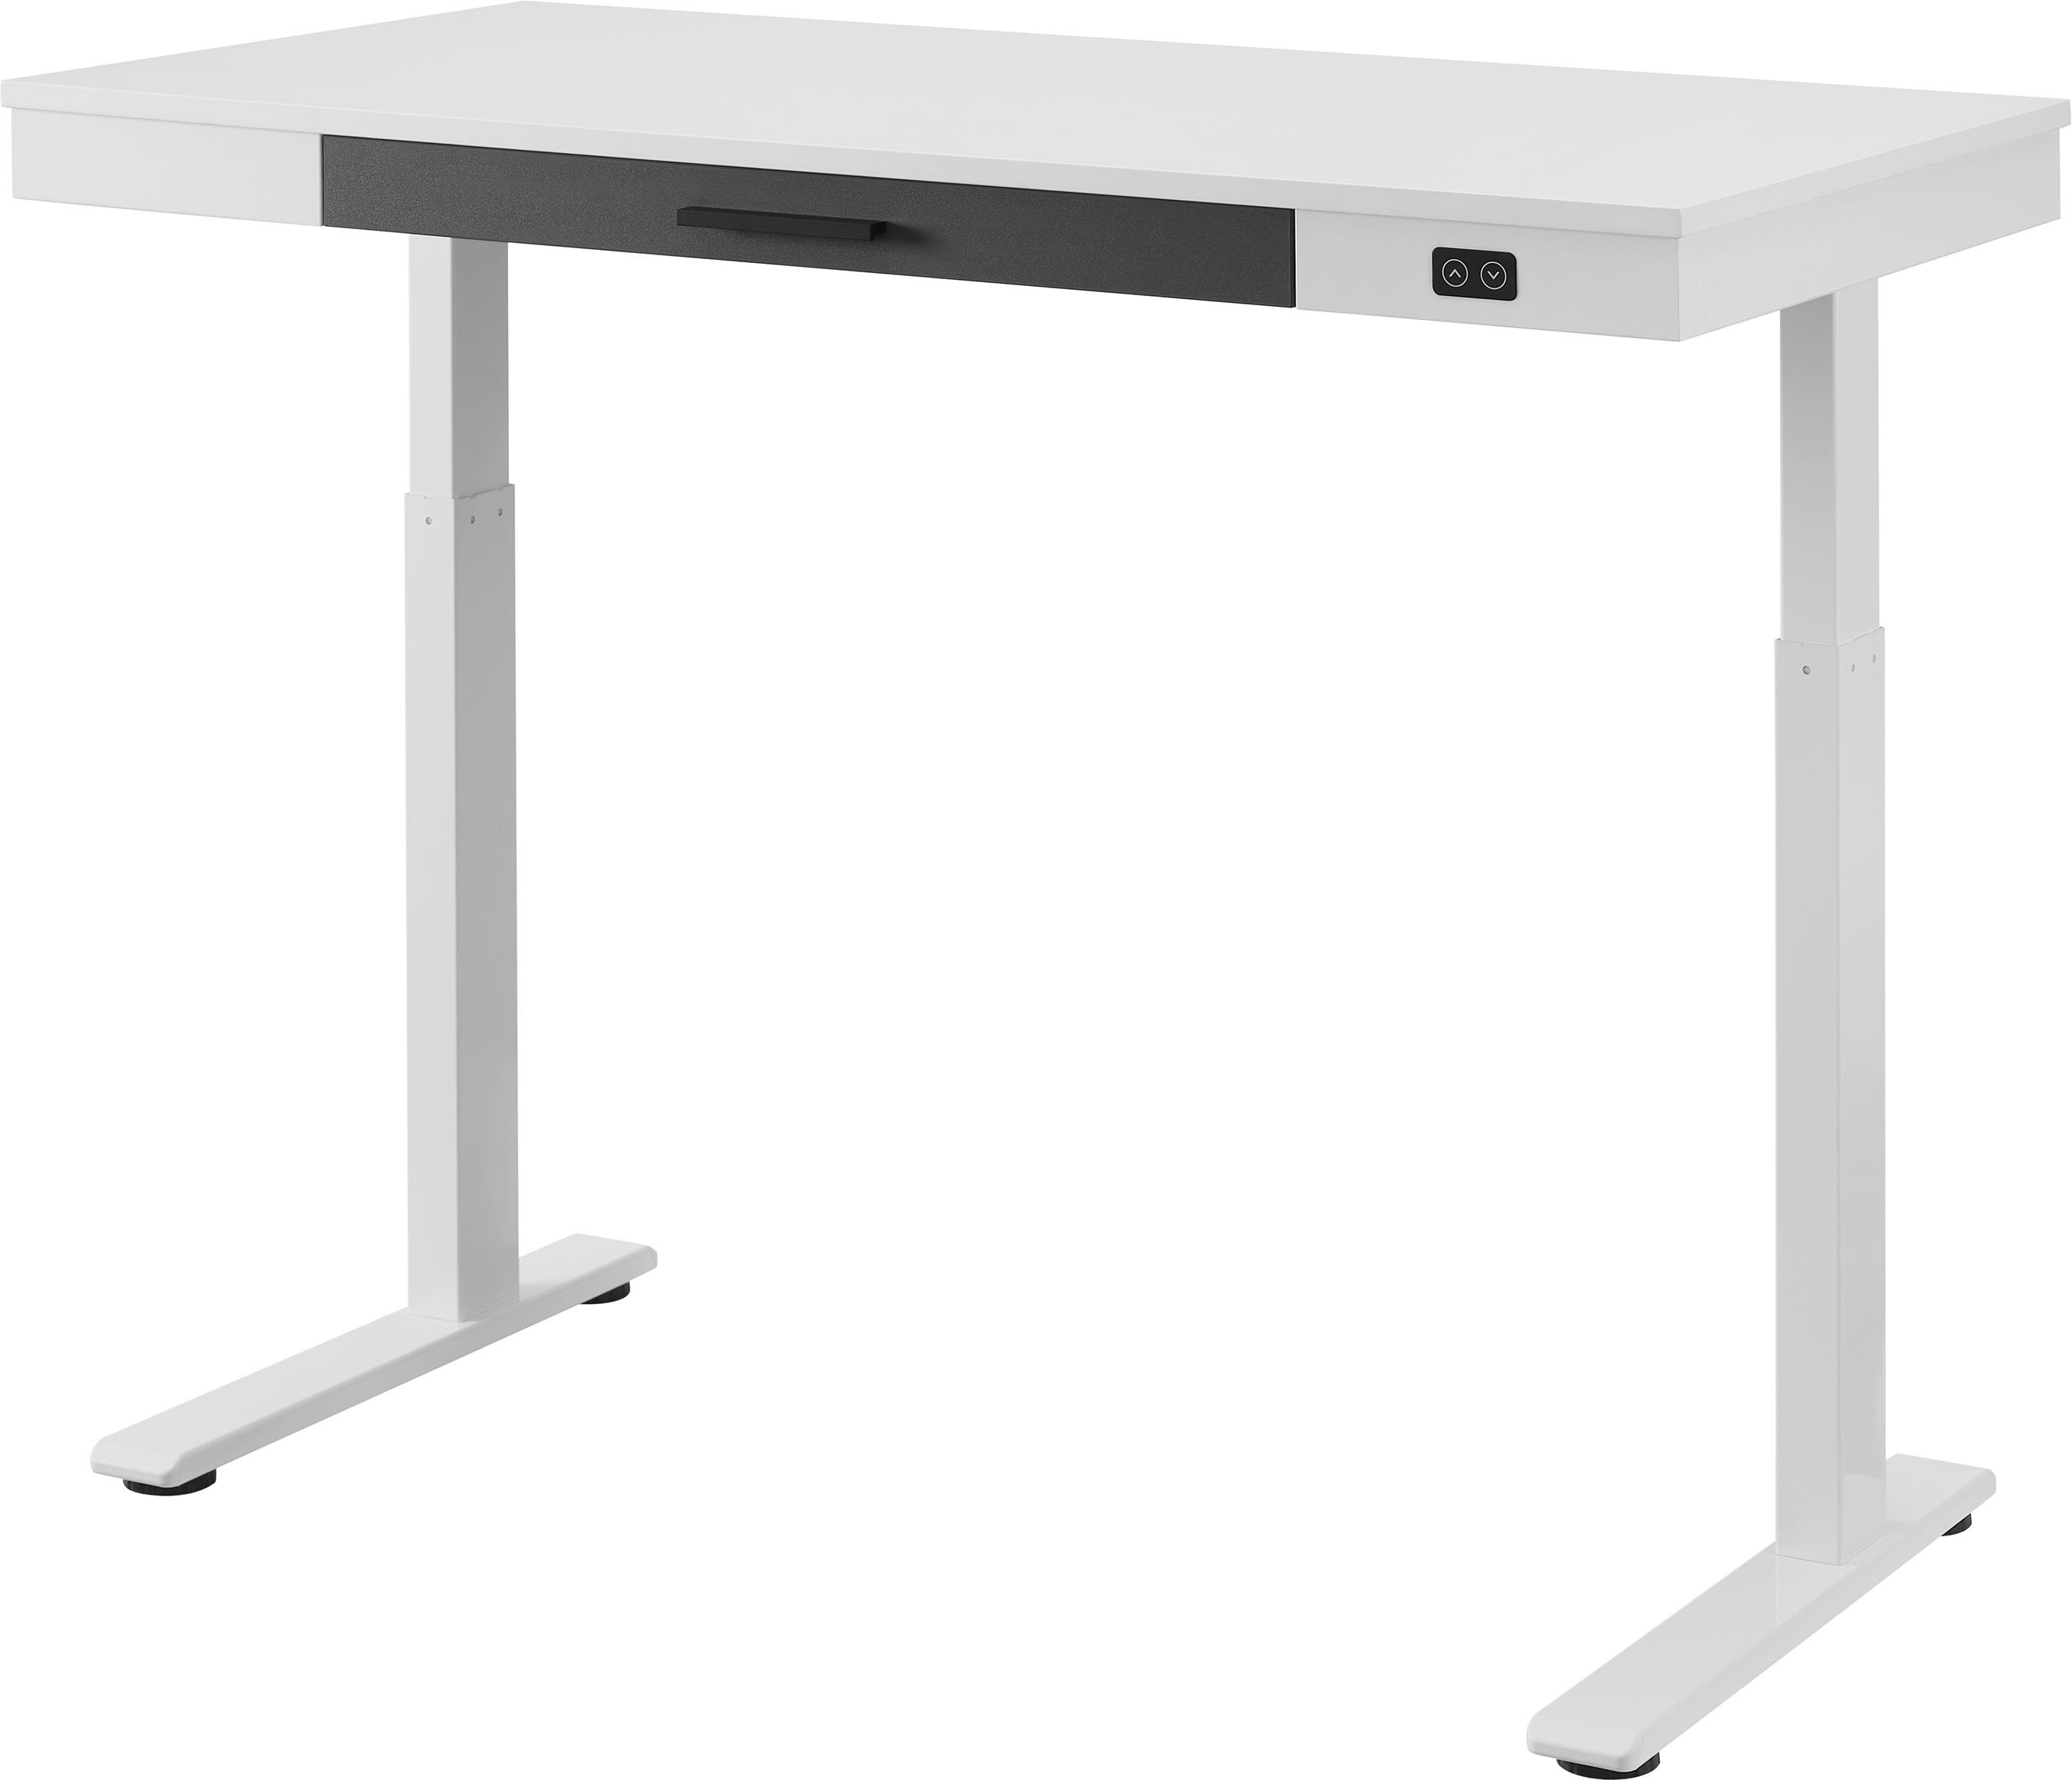 Insignia - Computer Desk with Drawer – 47 Wide - Dark Oak